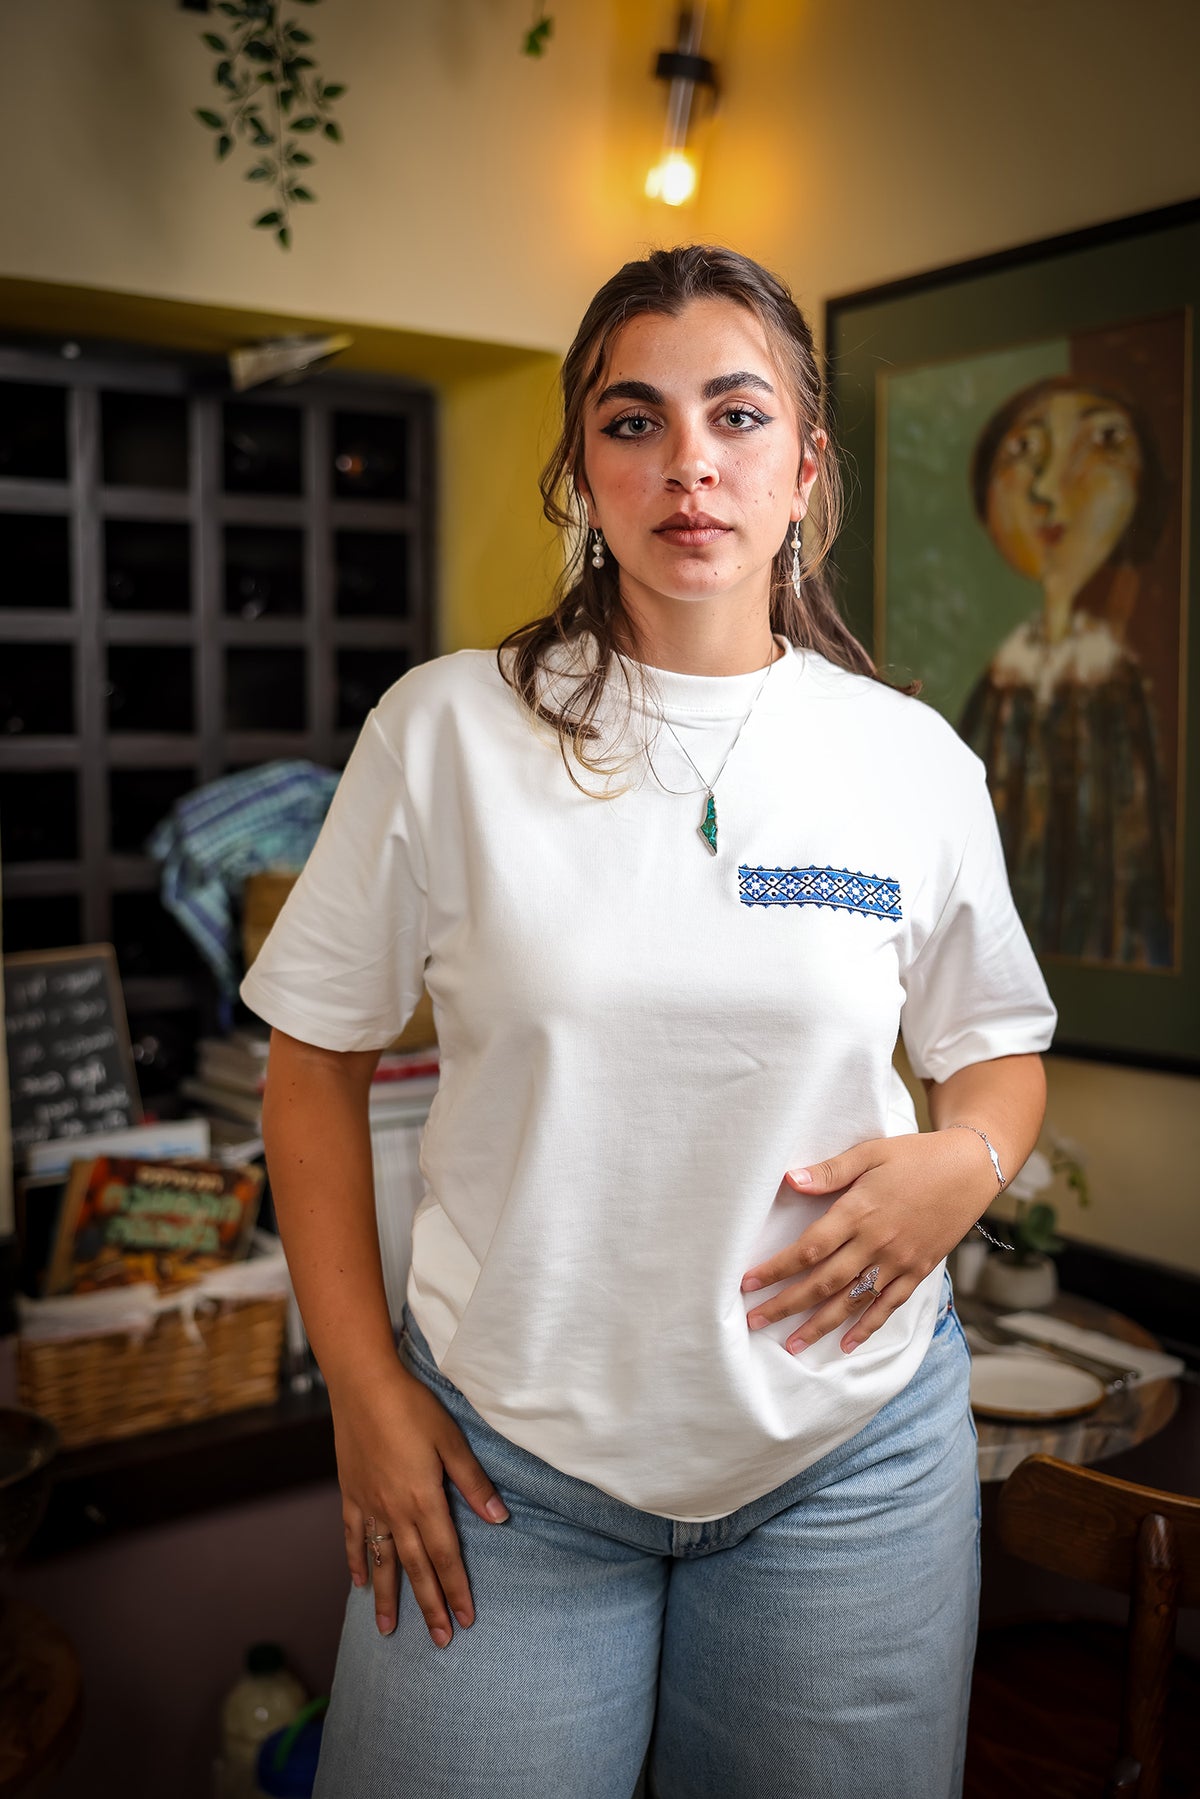 Palestinian Embroidery T-shirt